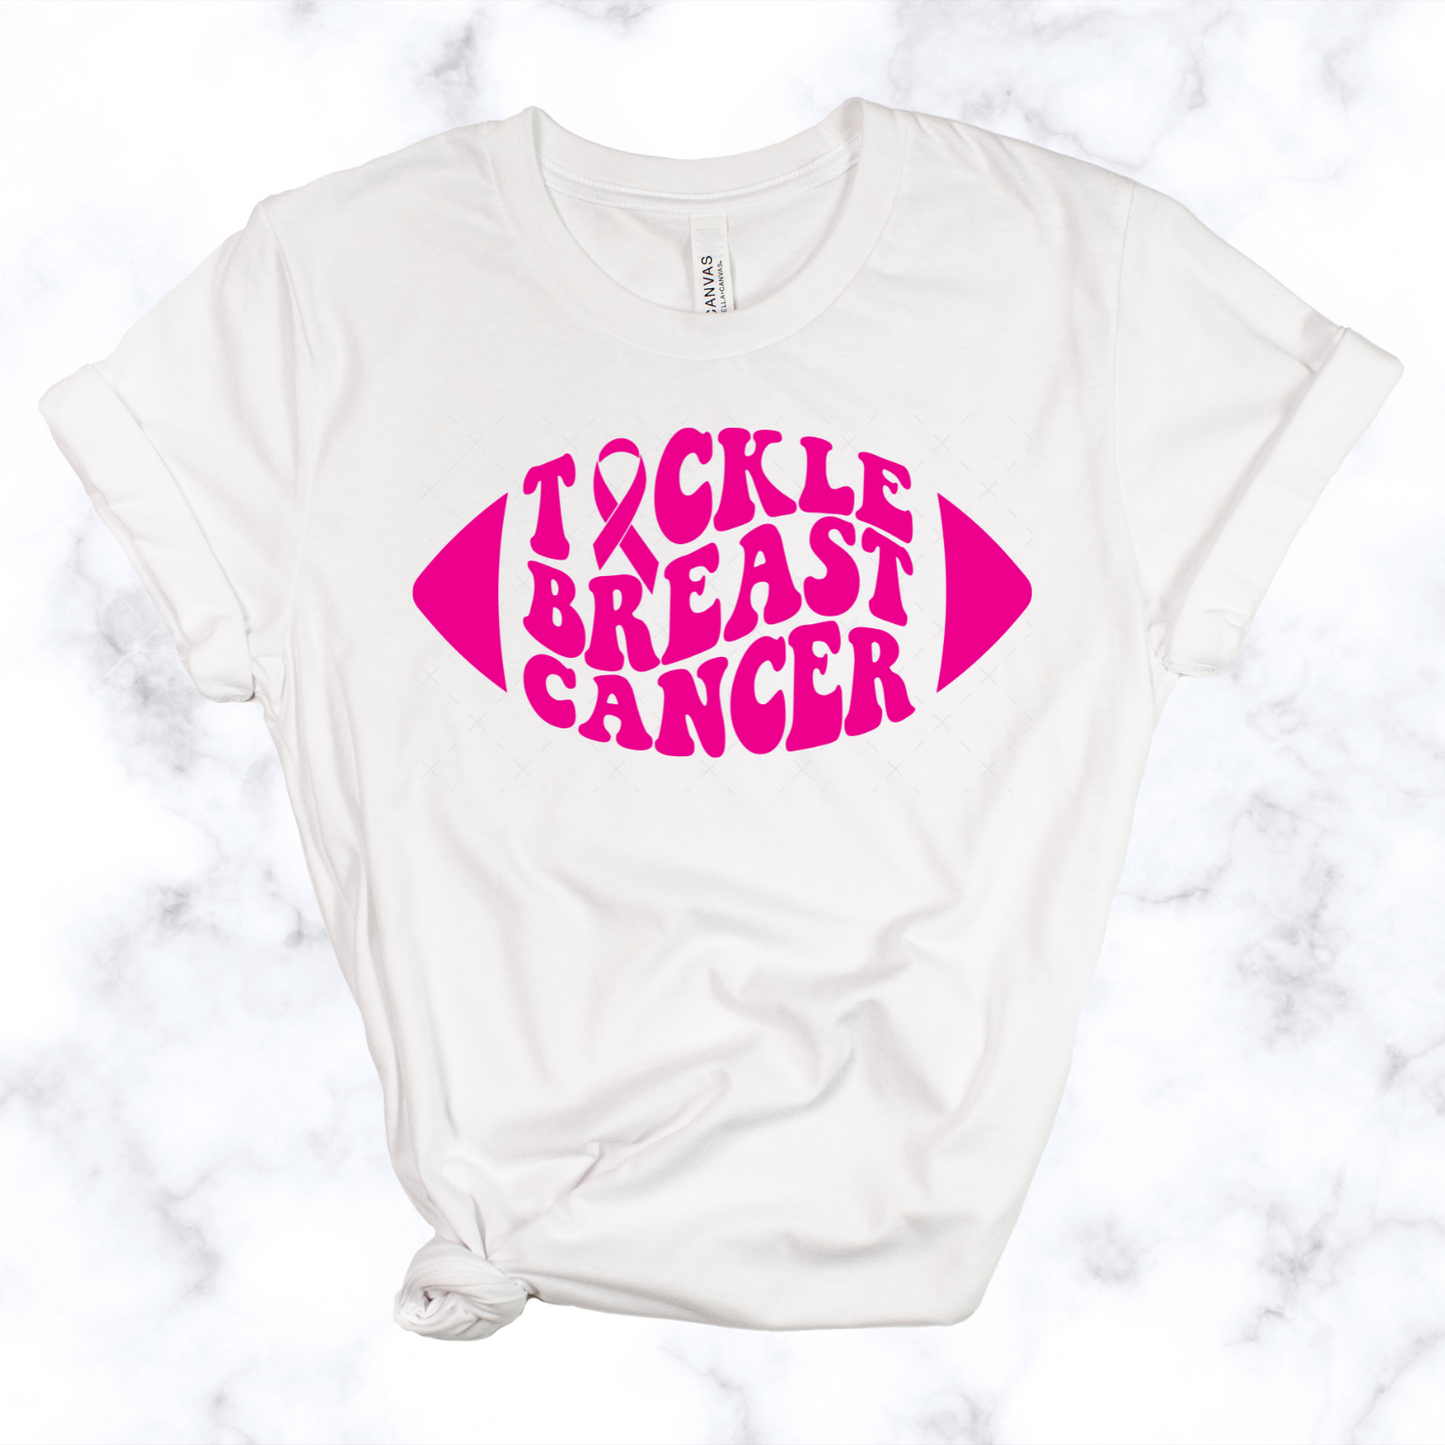 Tackle Breast Cancer Football Tee